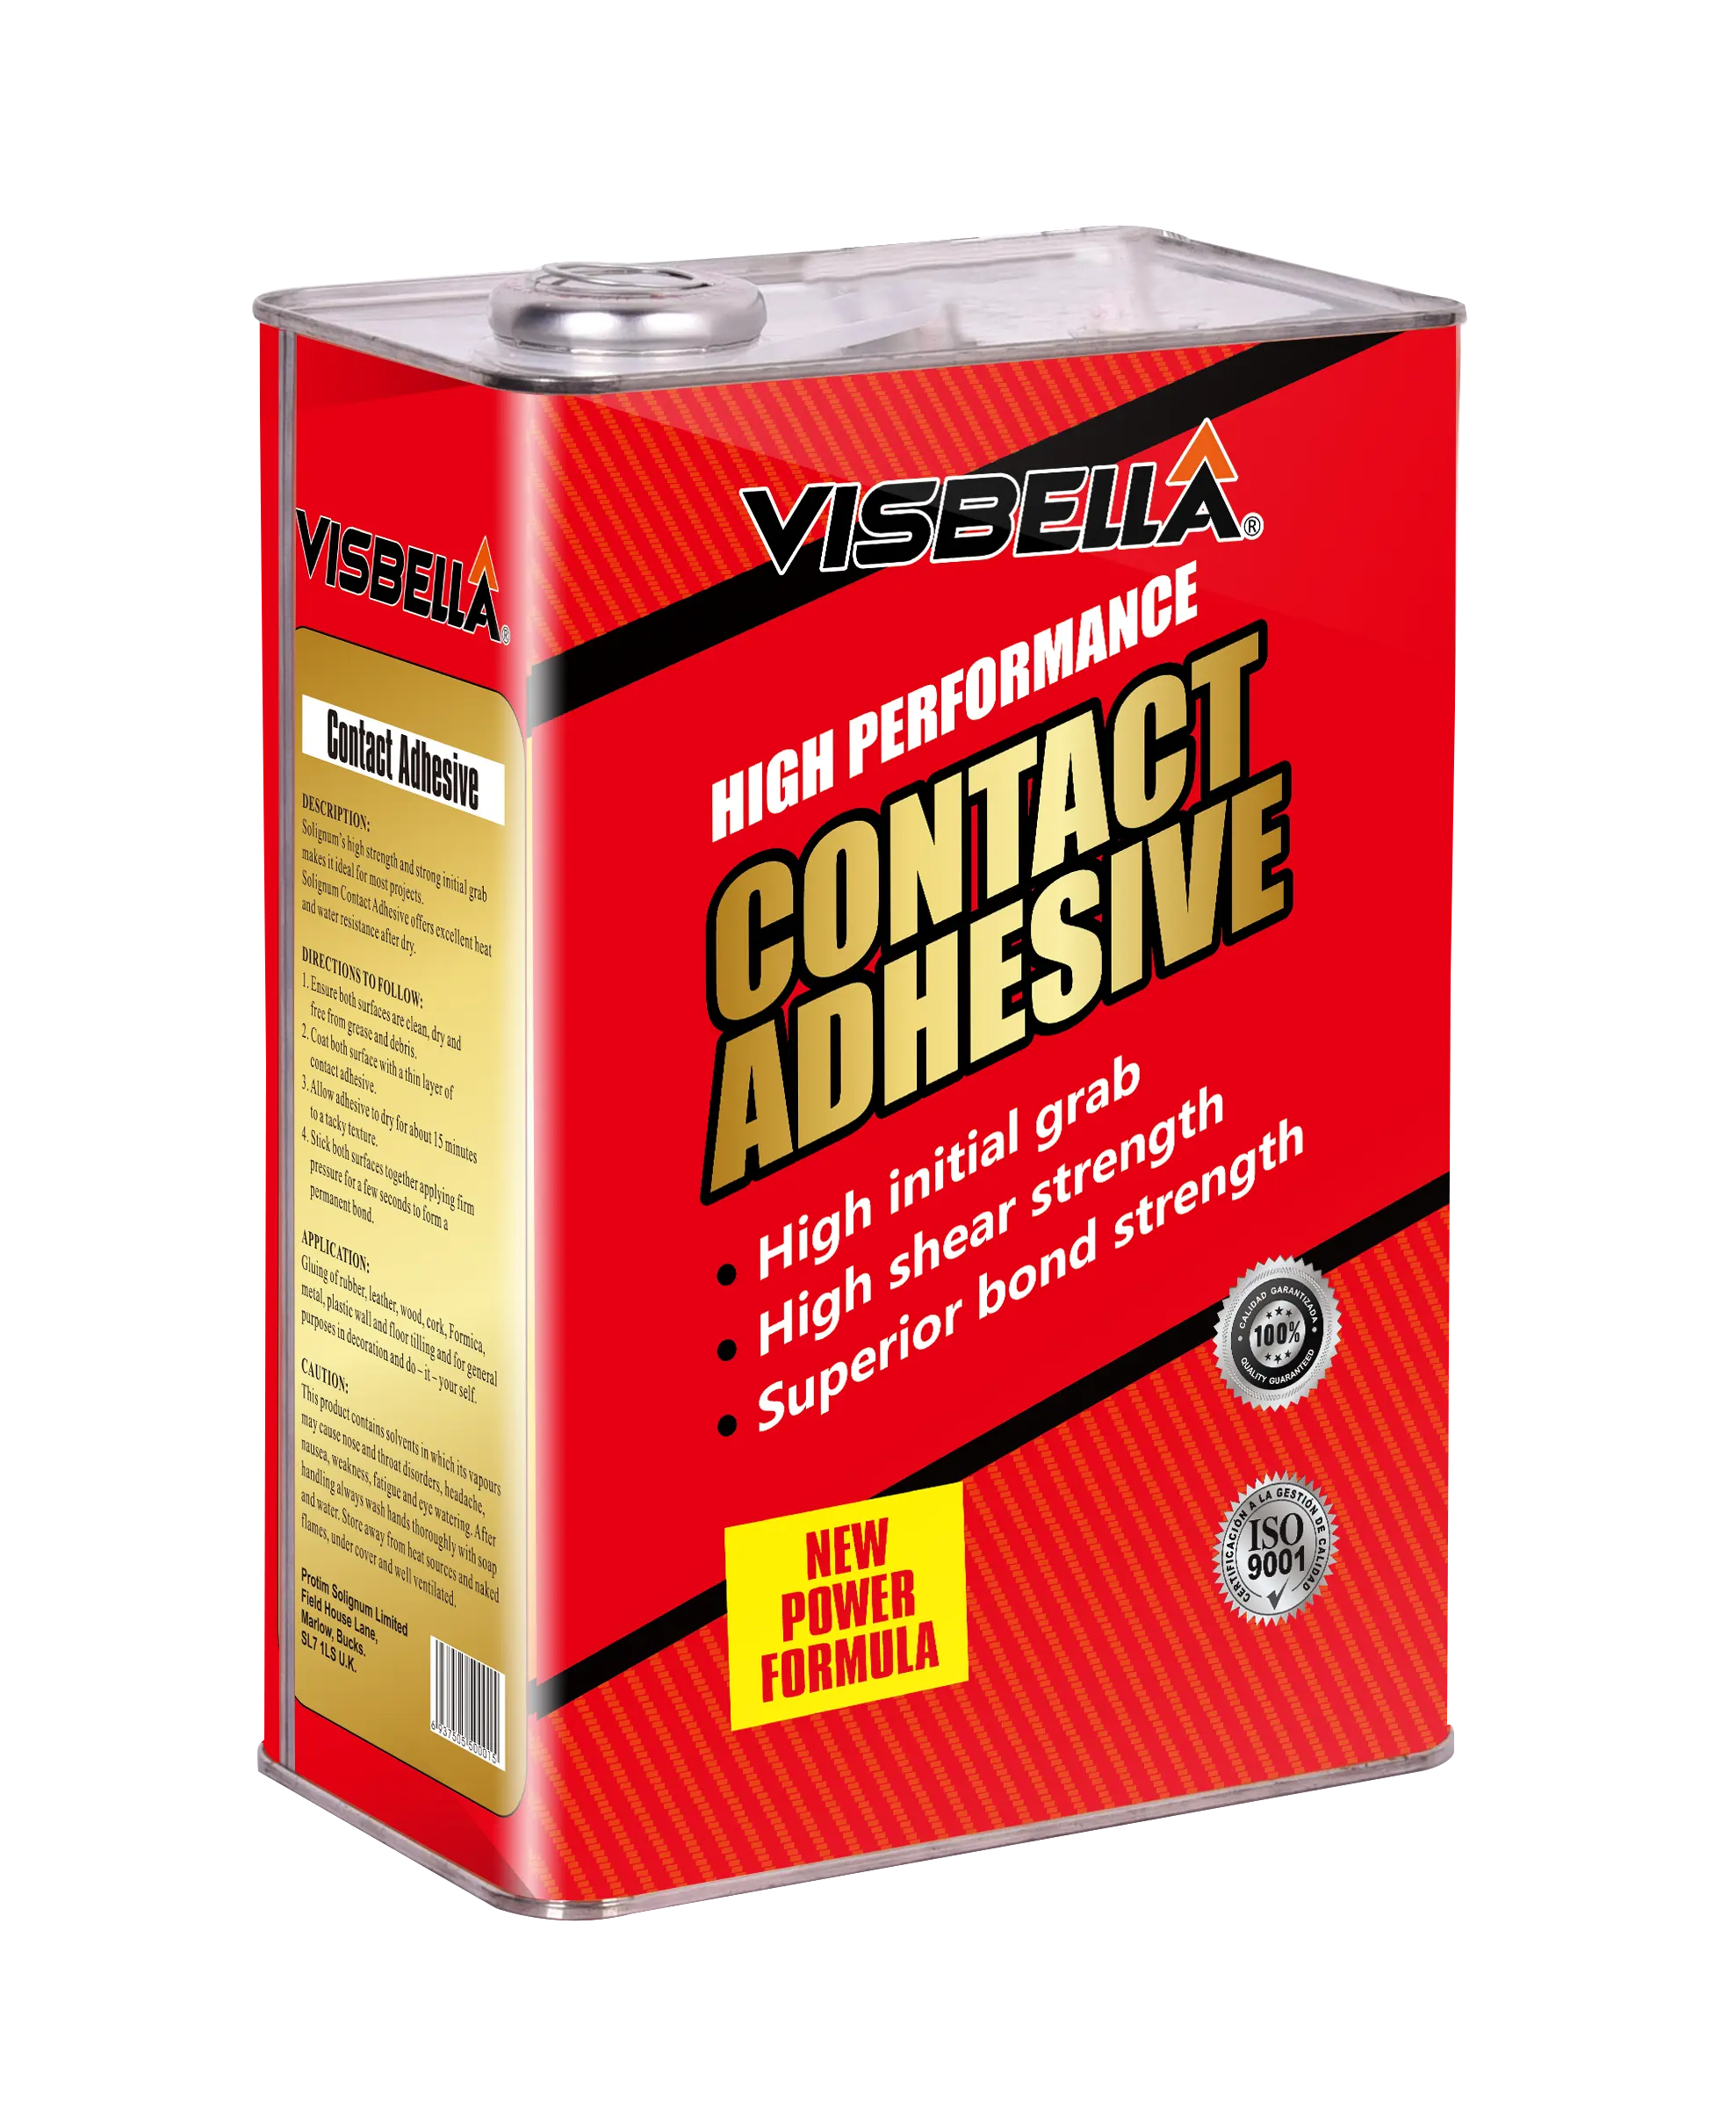 Visbella BSCI Certified neoprene cement shoe glue